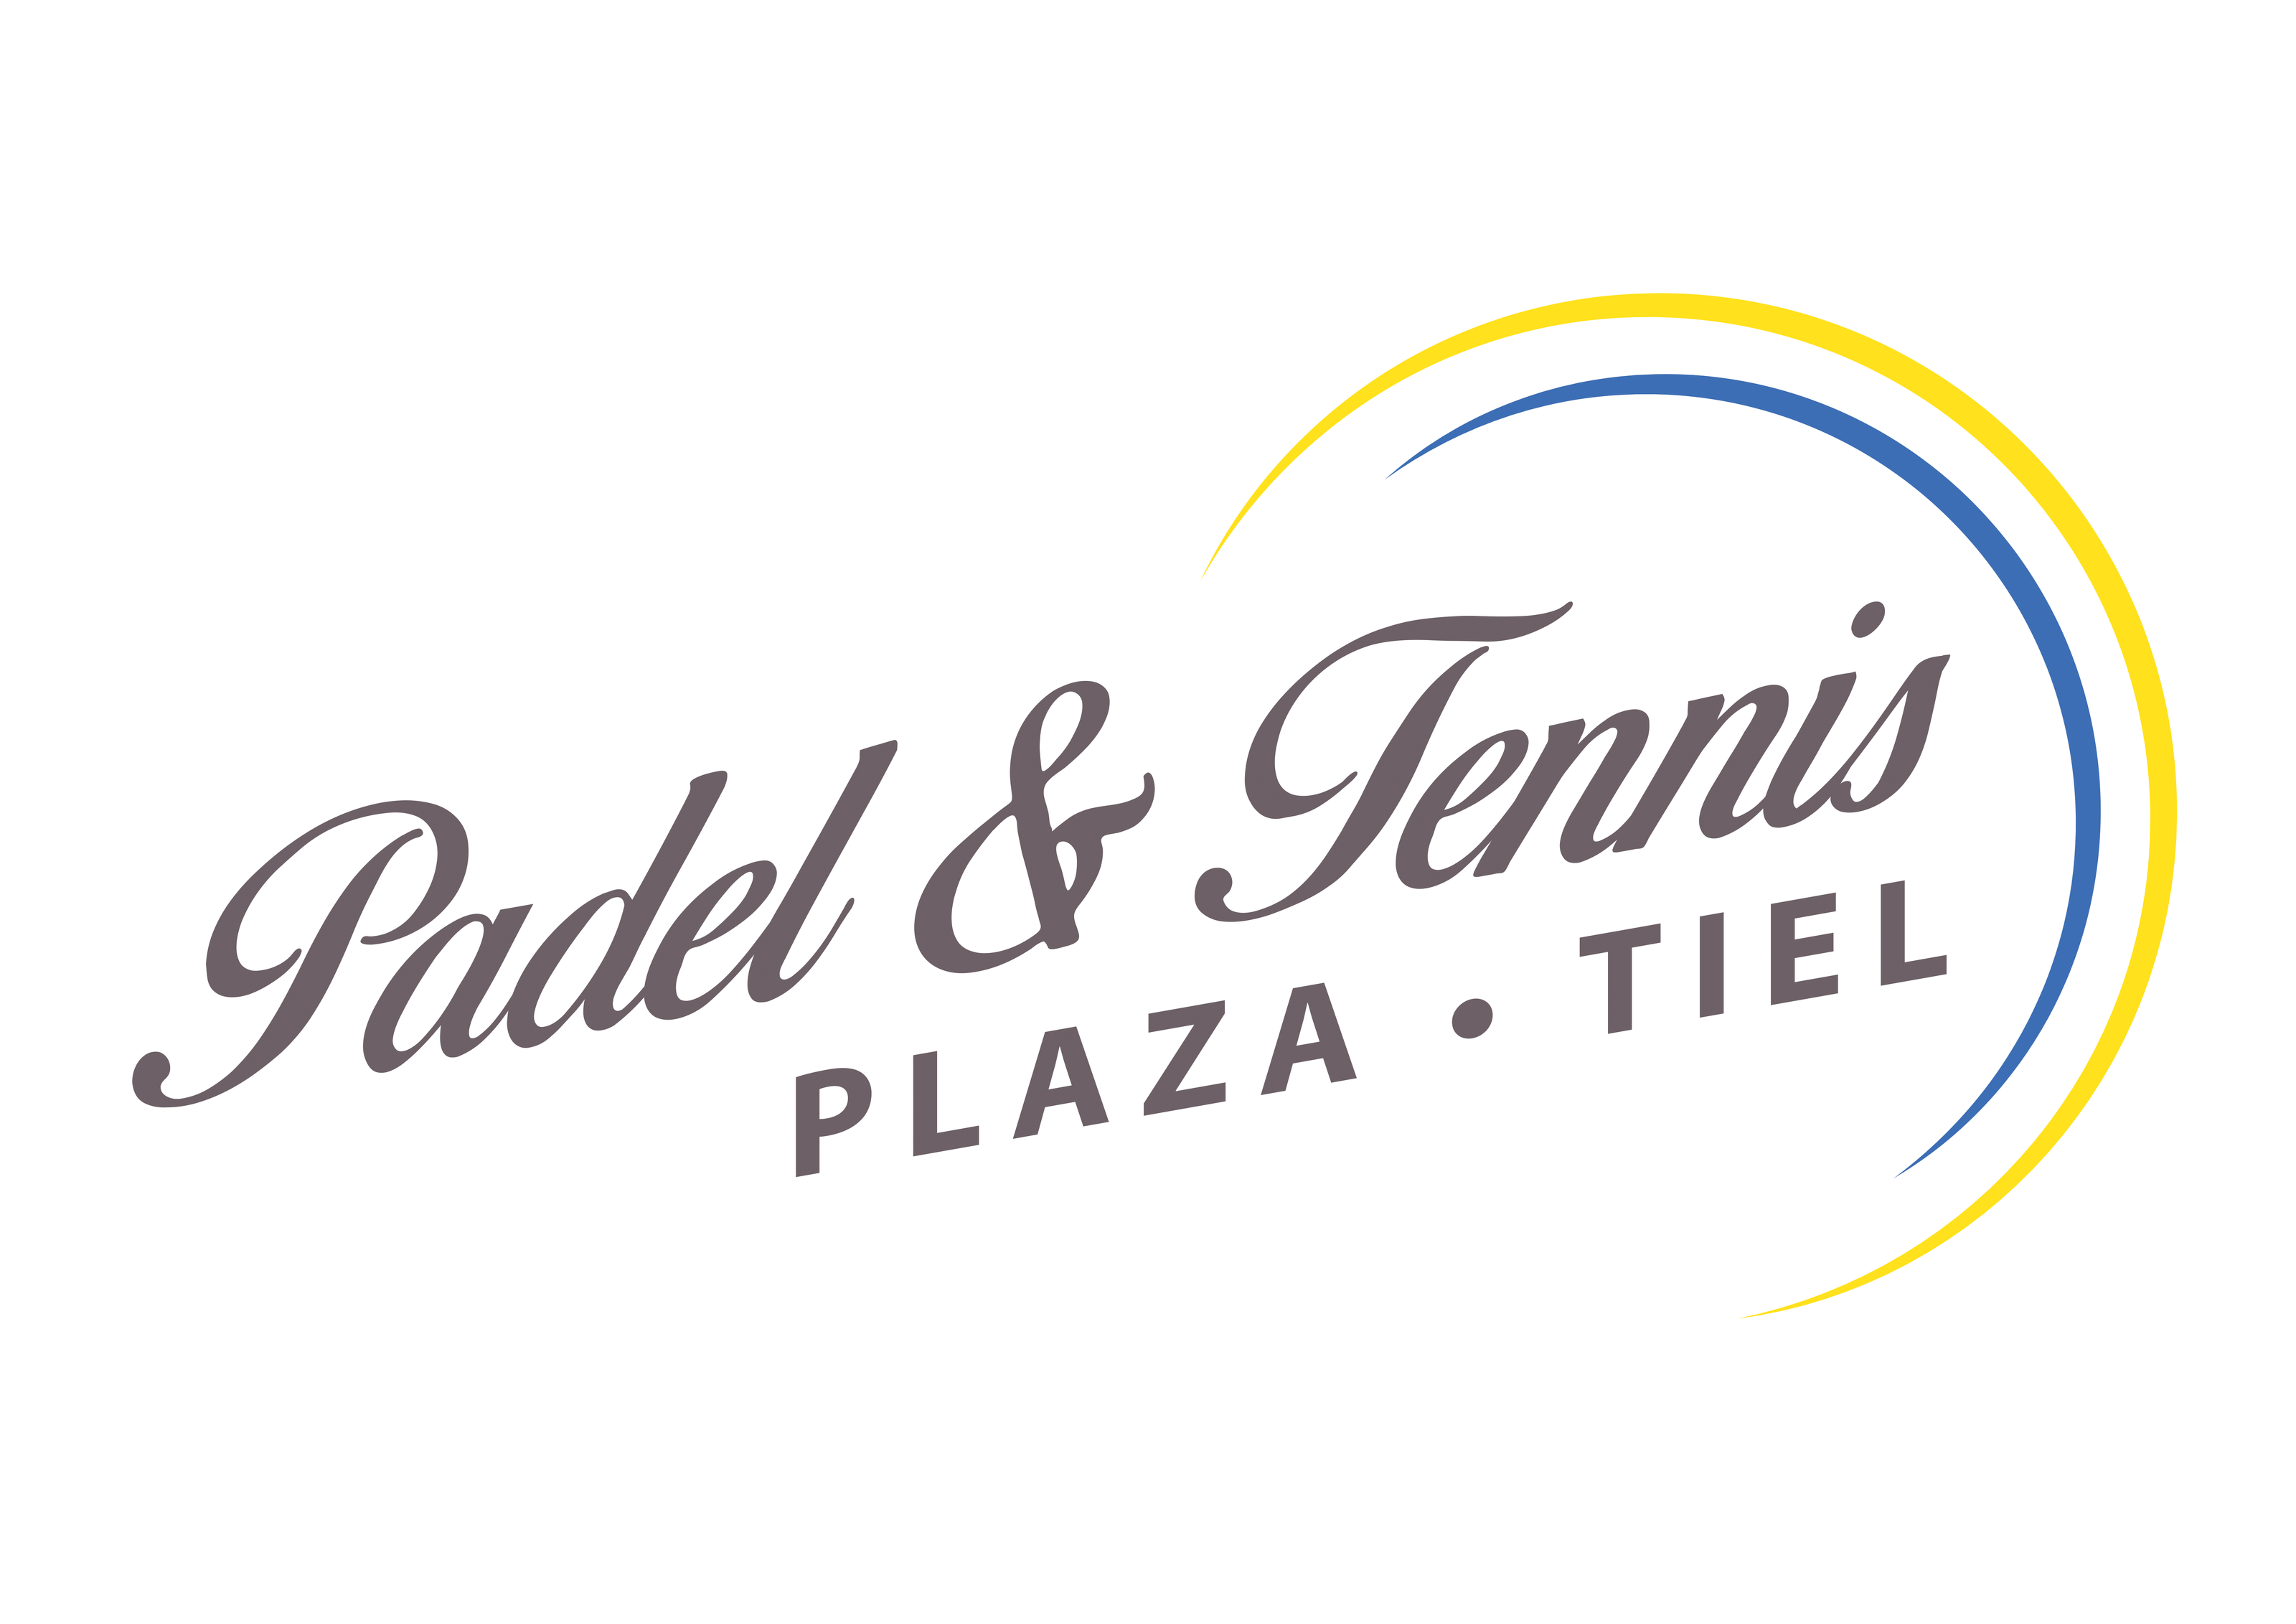 Logo Padel & Tennis Plaza Tiel